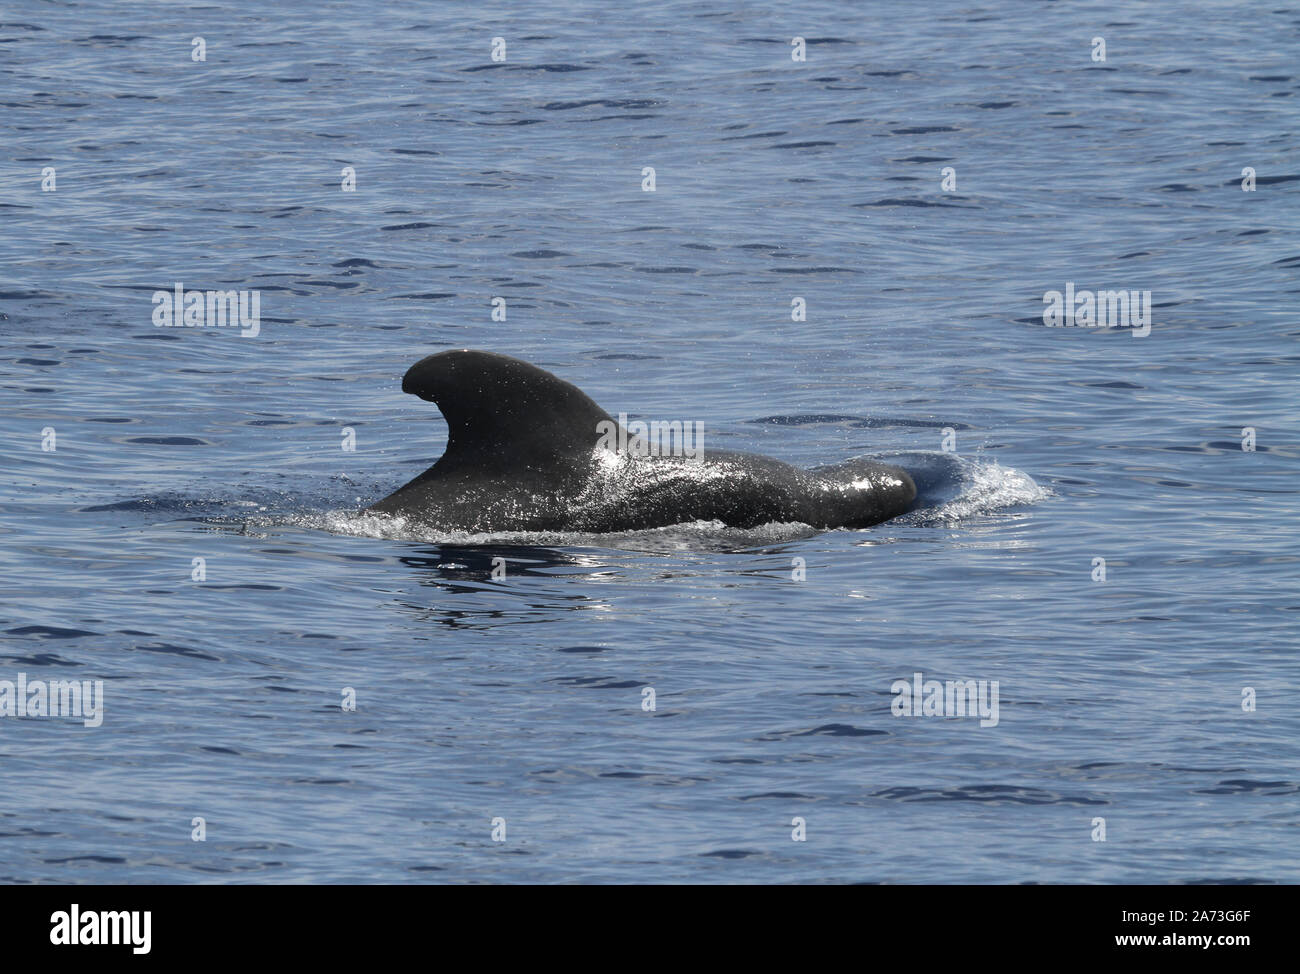 Short-finned Pilot Whale Stock Photo